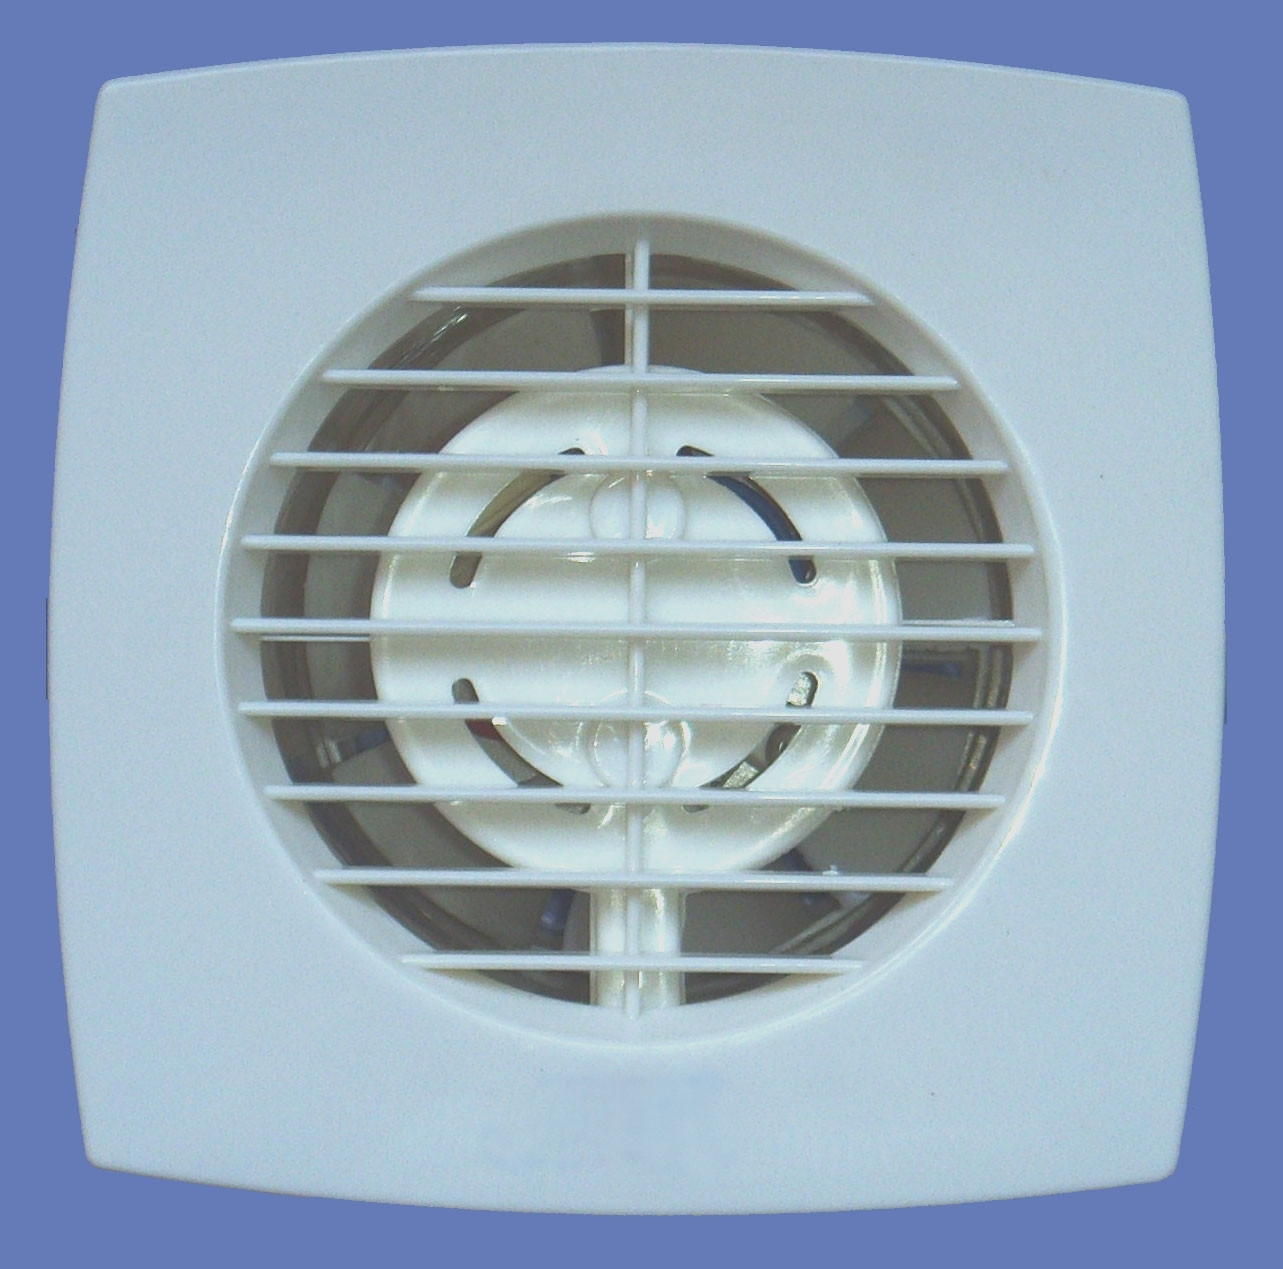 Bathroom Exhaust Fan Exterior Cover
 Installing Exhaust Fan Cover – Madison Art Center Design